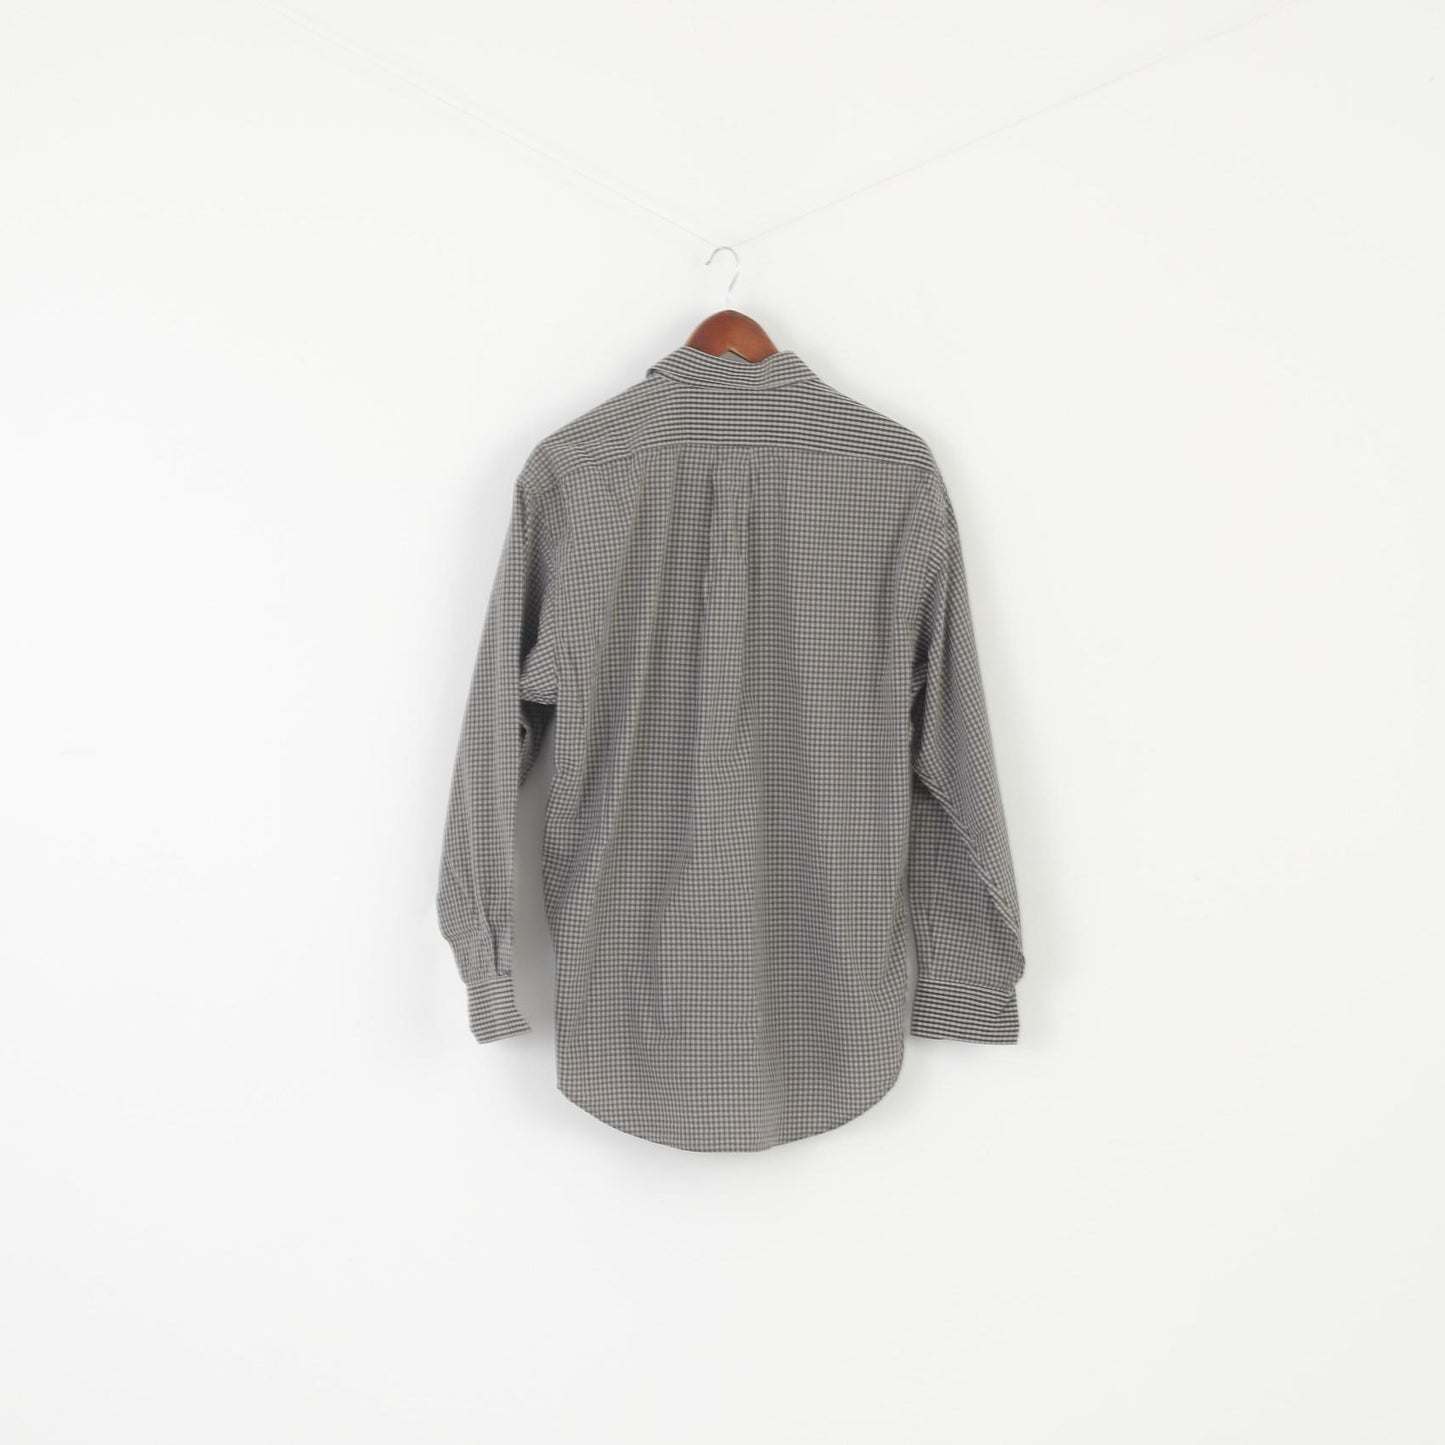 Joop! Men 39 15.5 L Casual Shirt Gray Check Cotton Vintage Long Sleeve Top